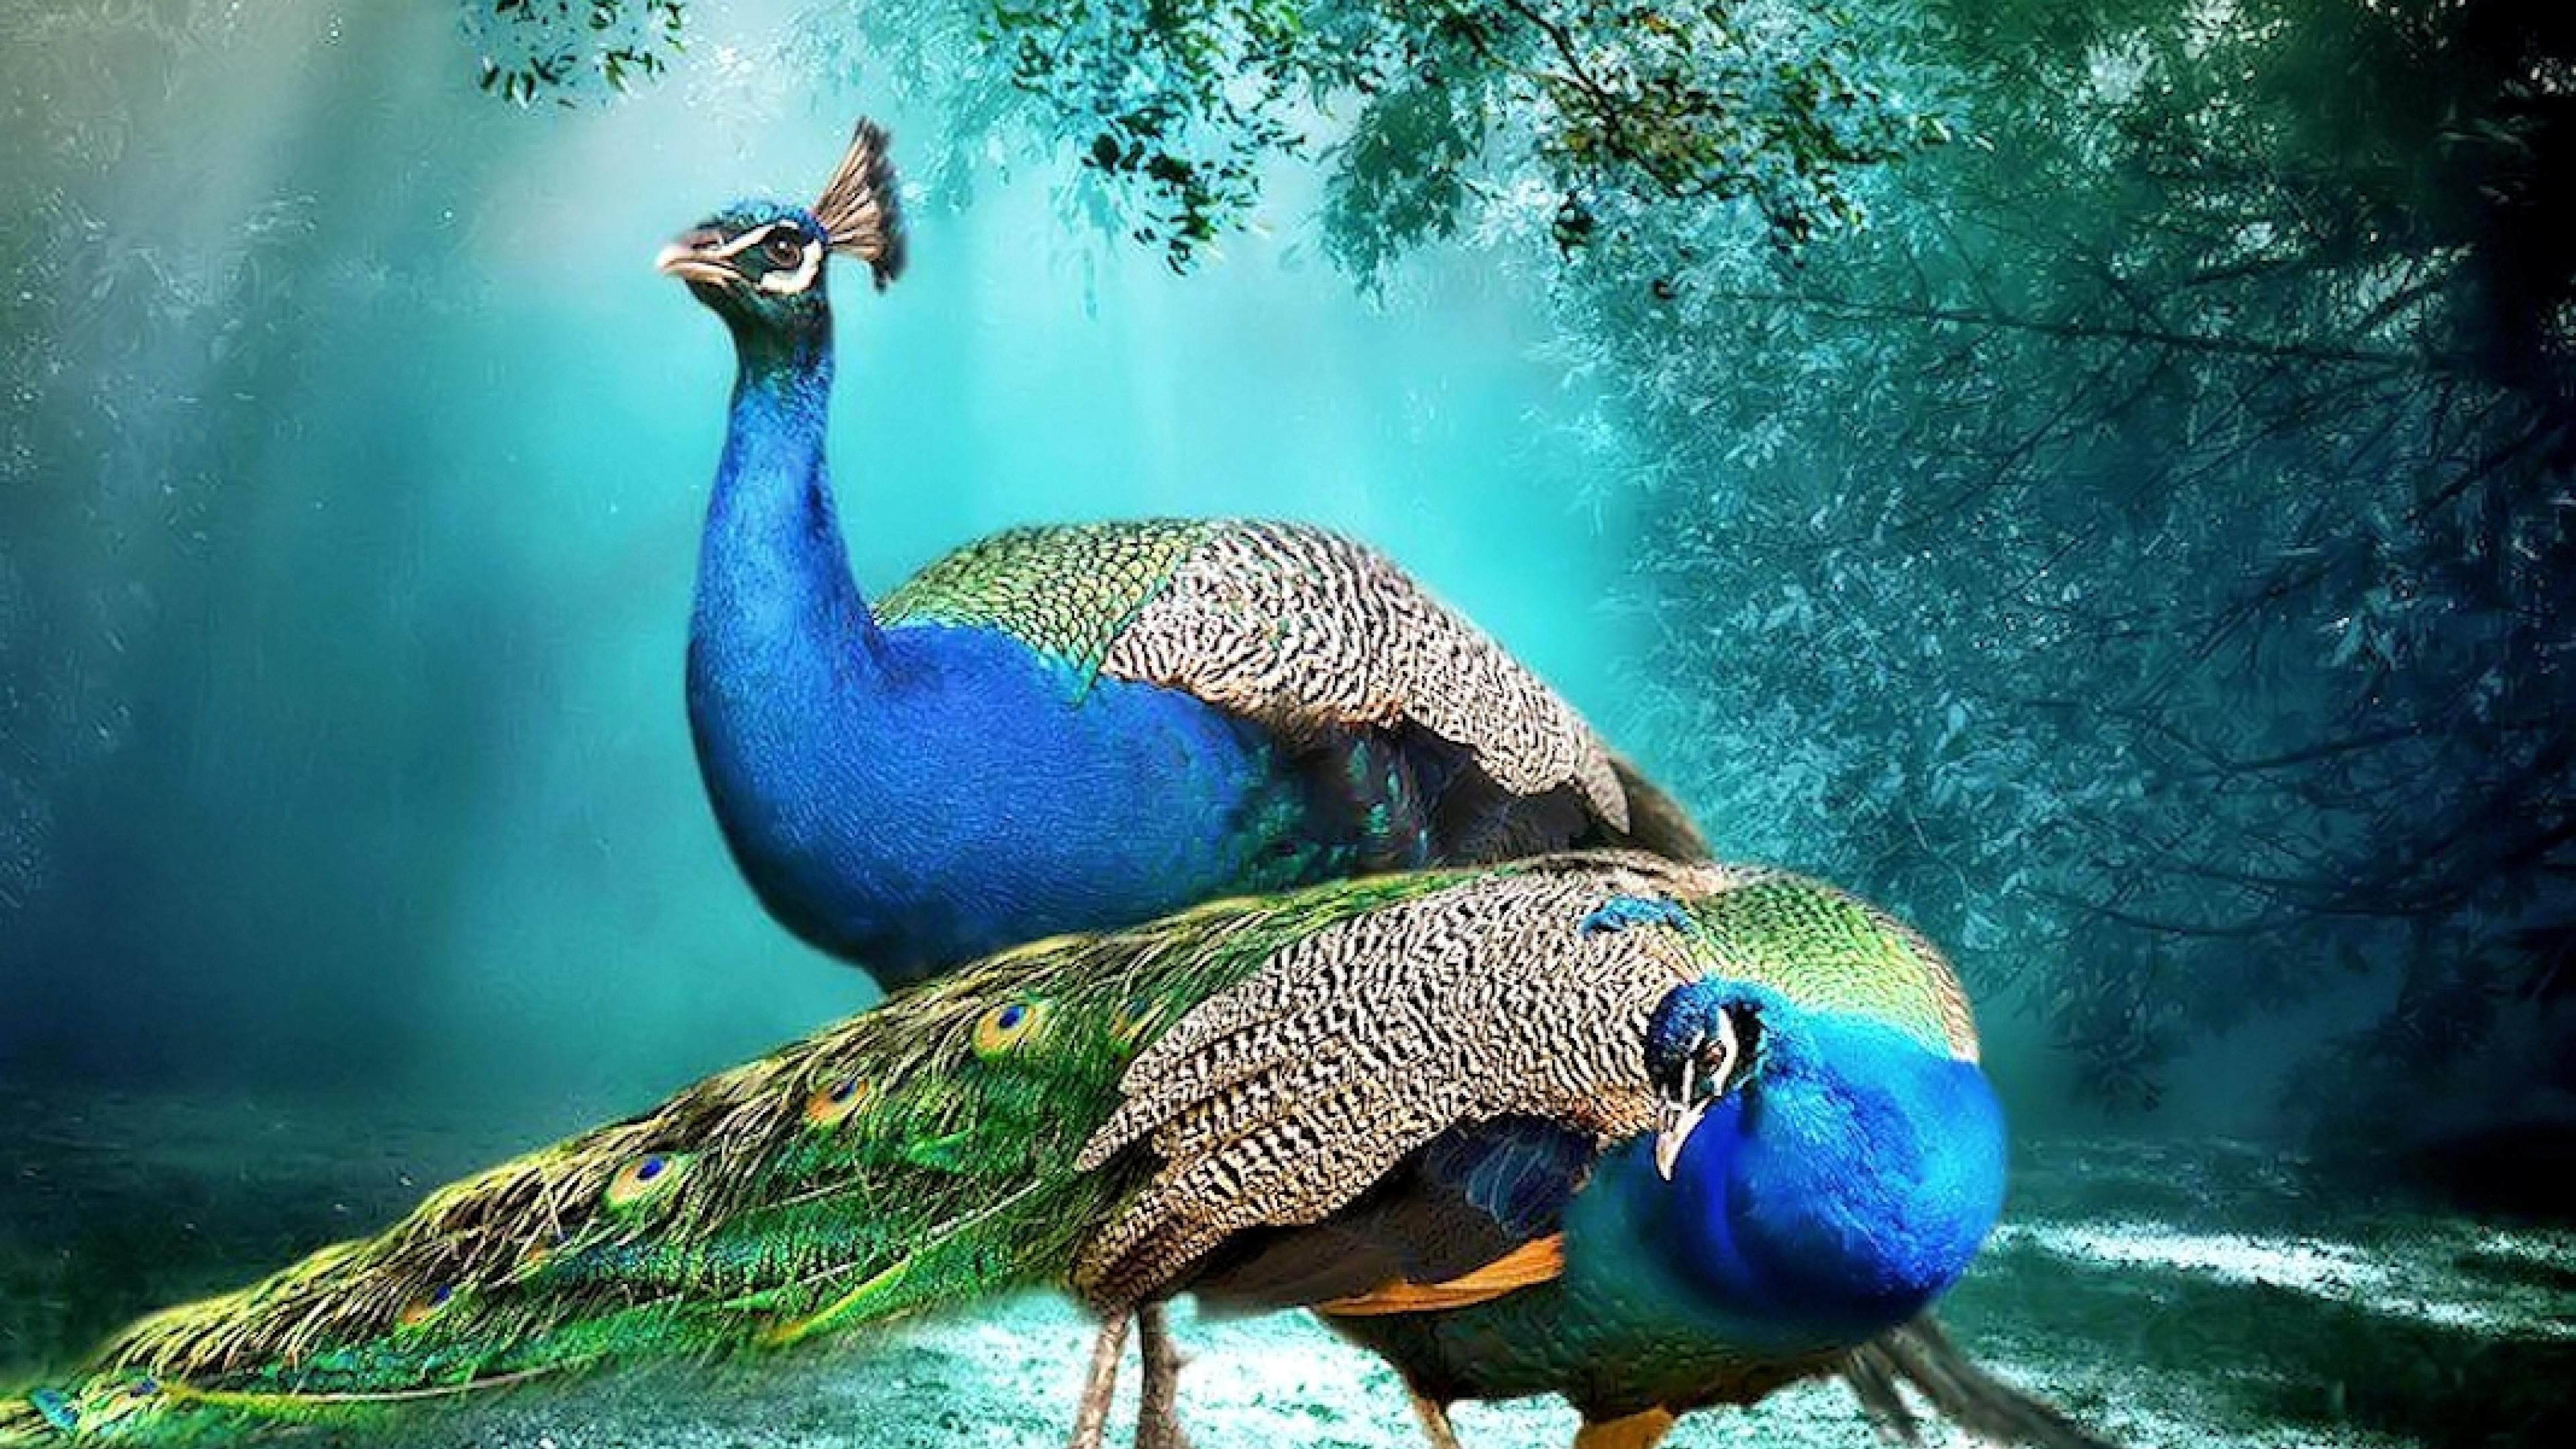 tyke peacock